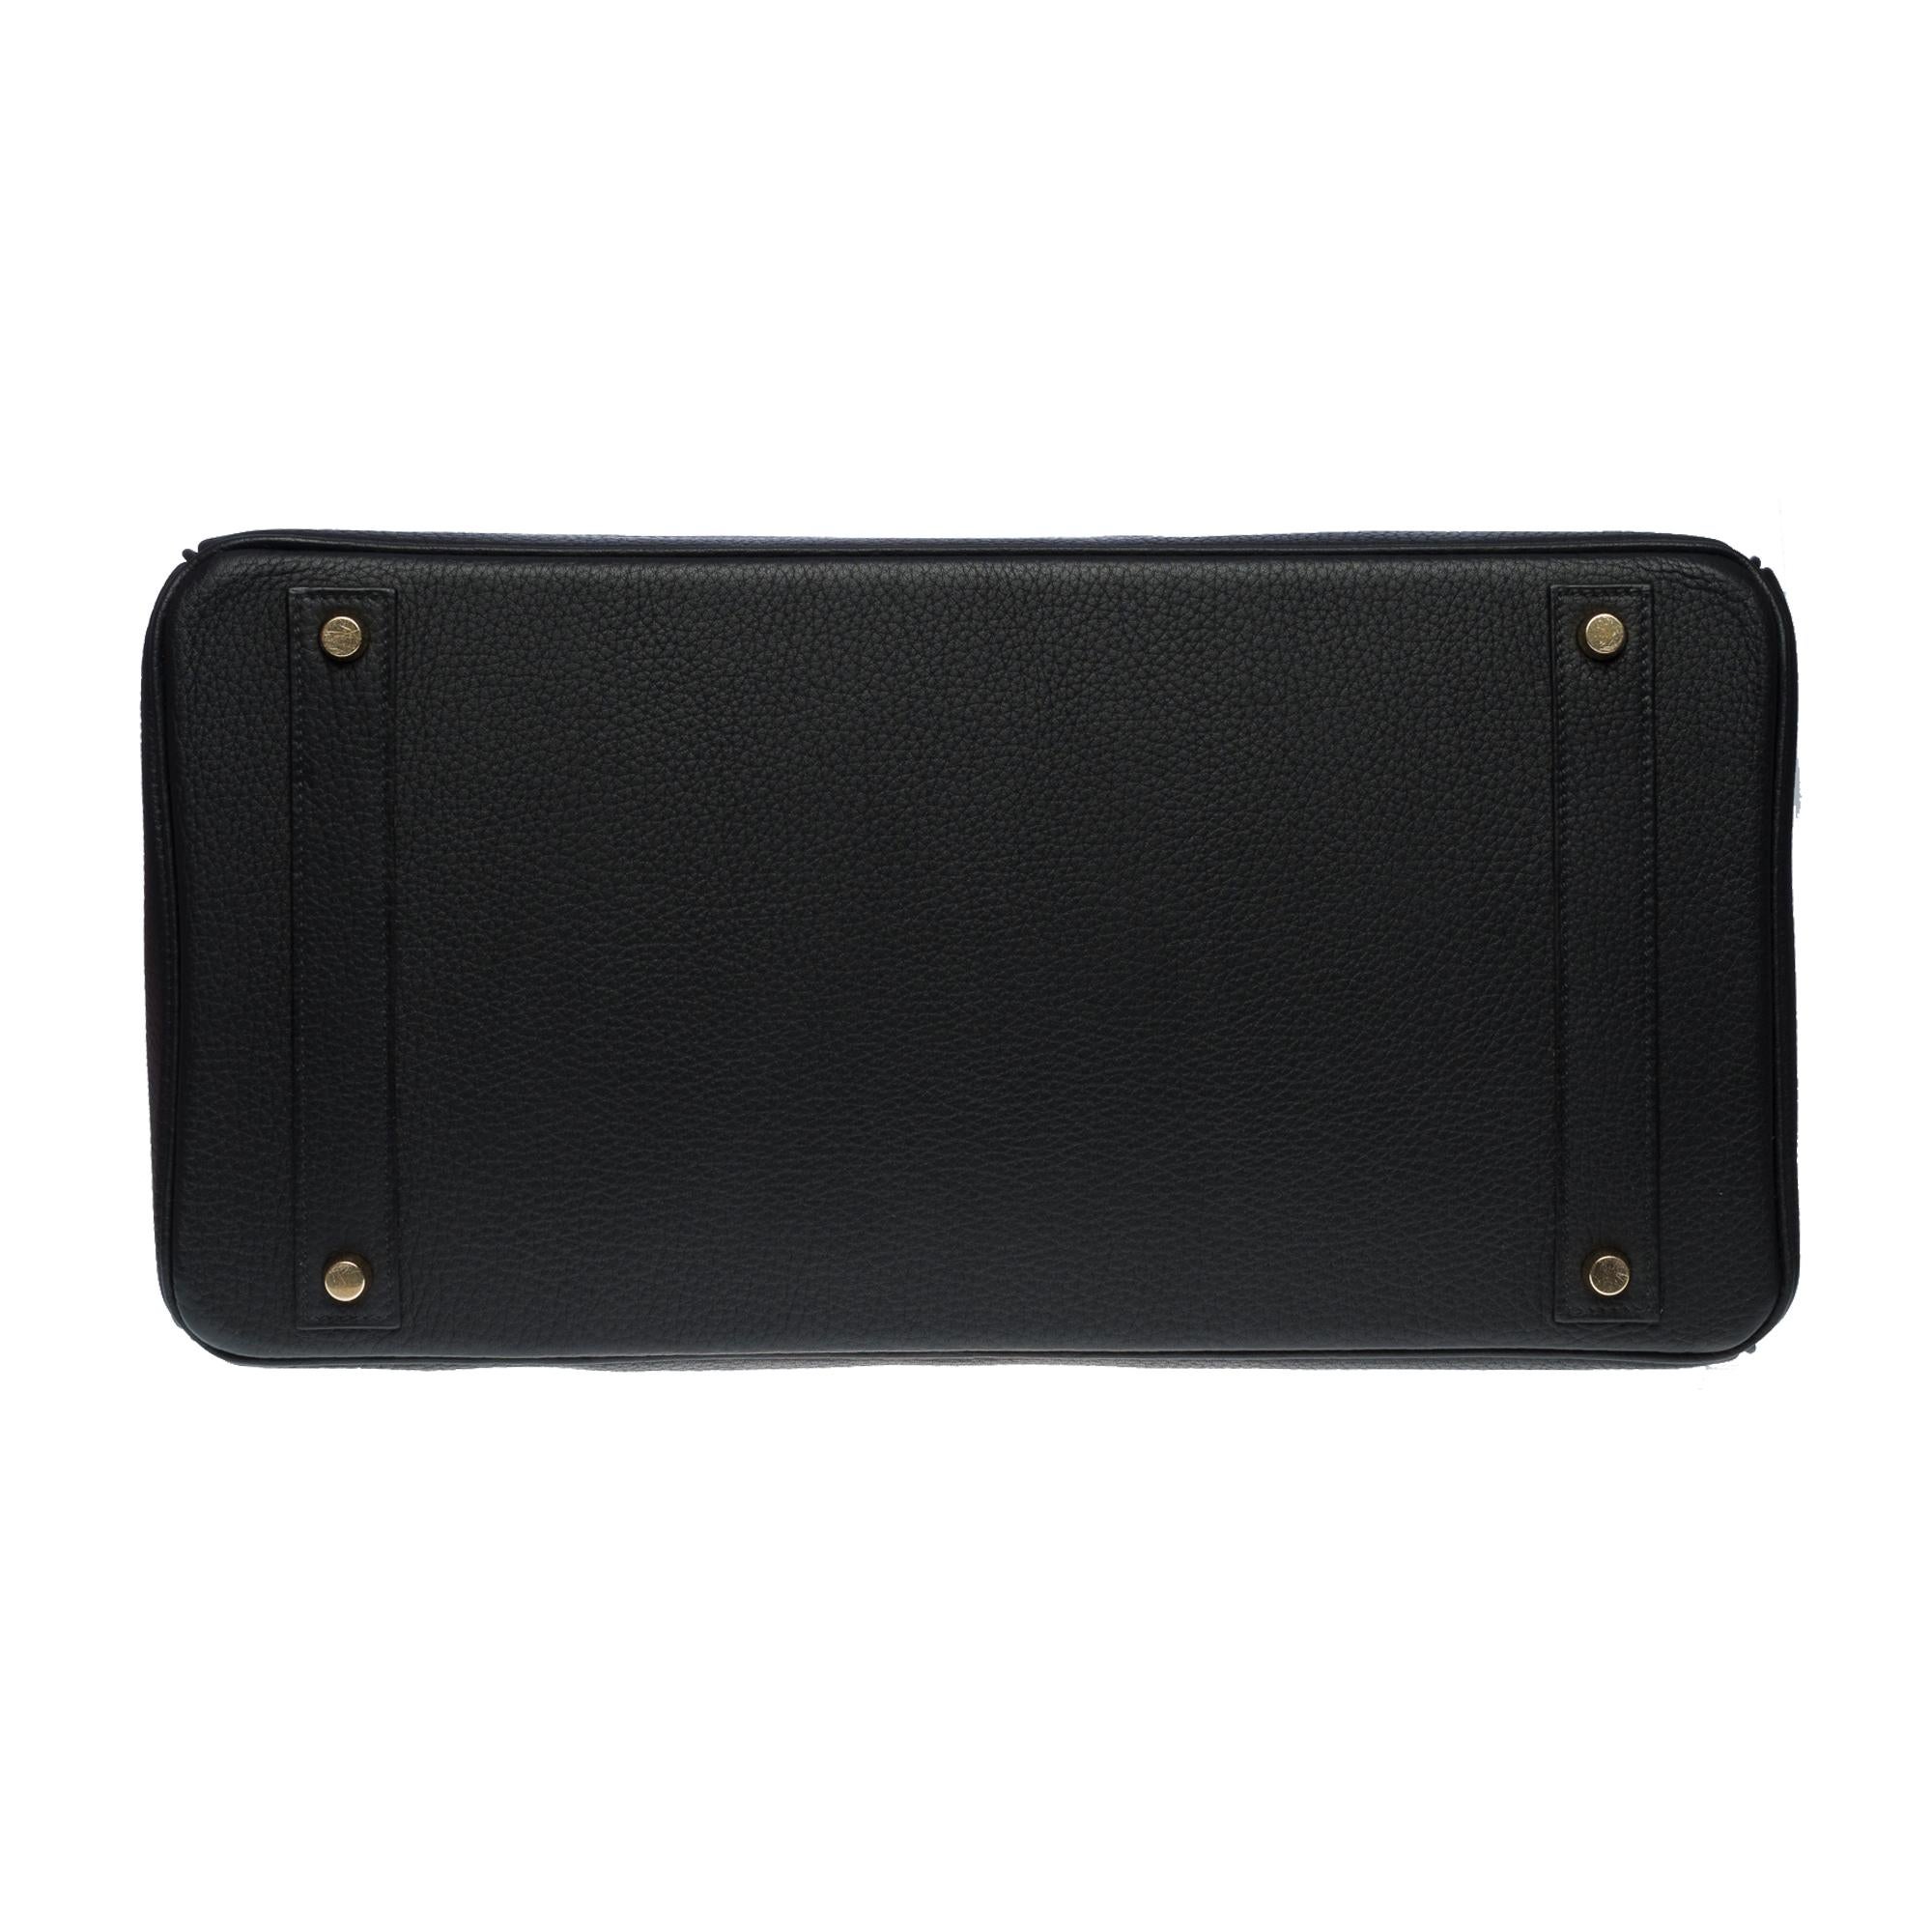 Stunning Hermes Birkin 40cm handbag in Black Togo leather, GHW 6